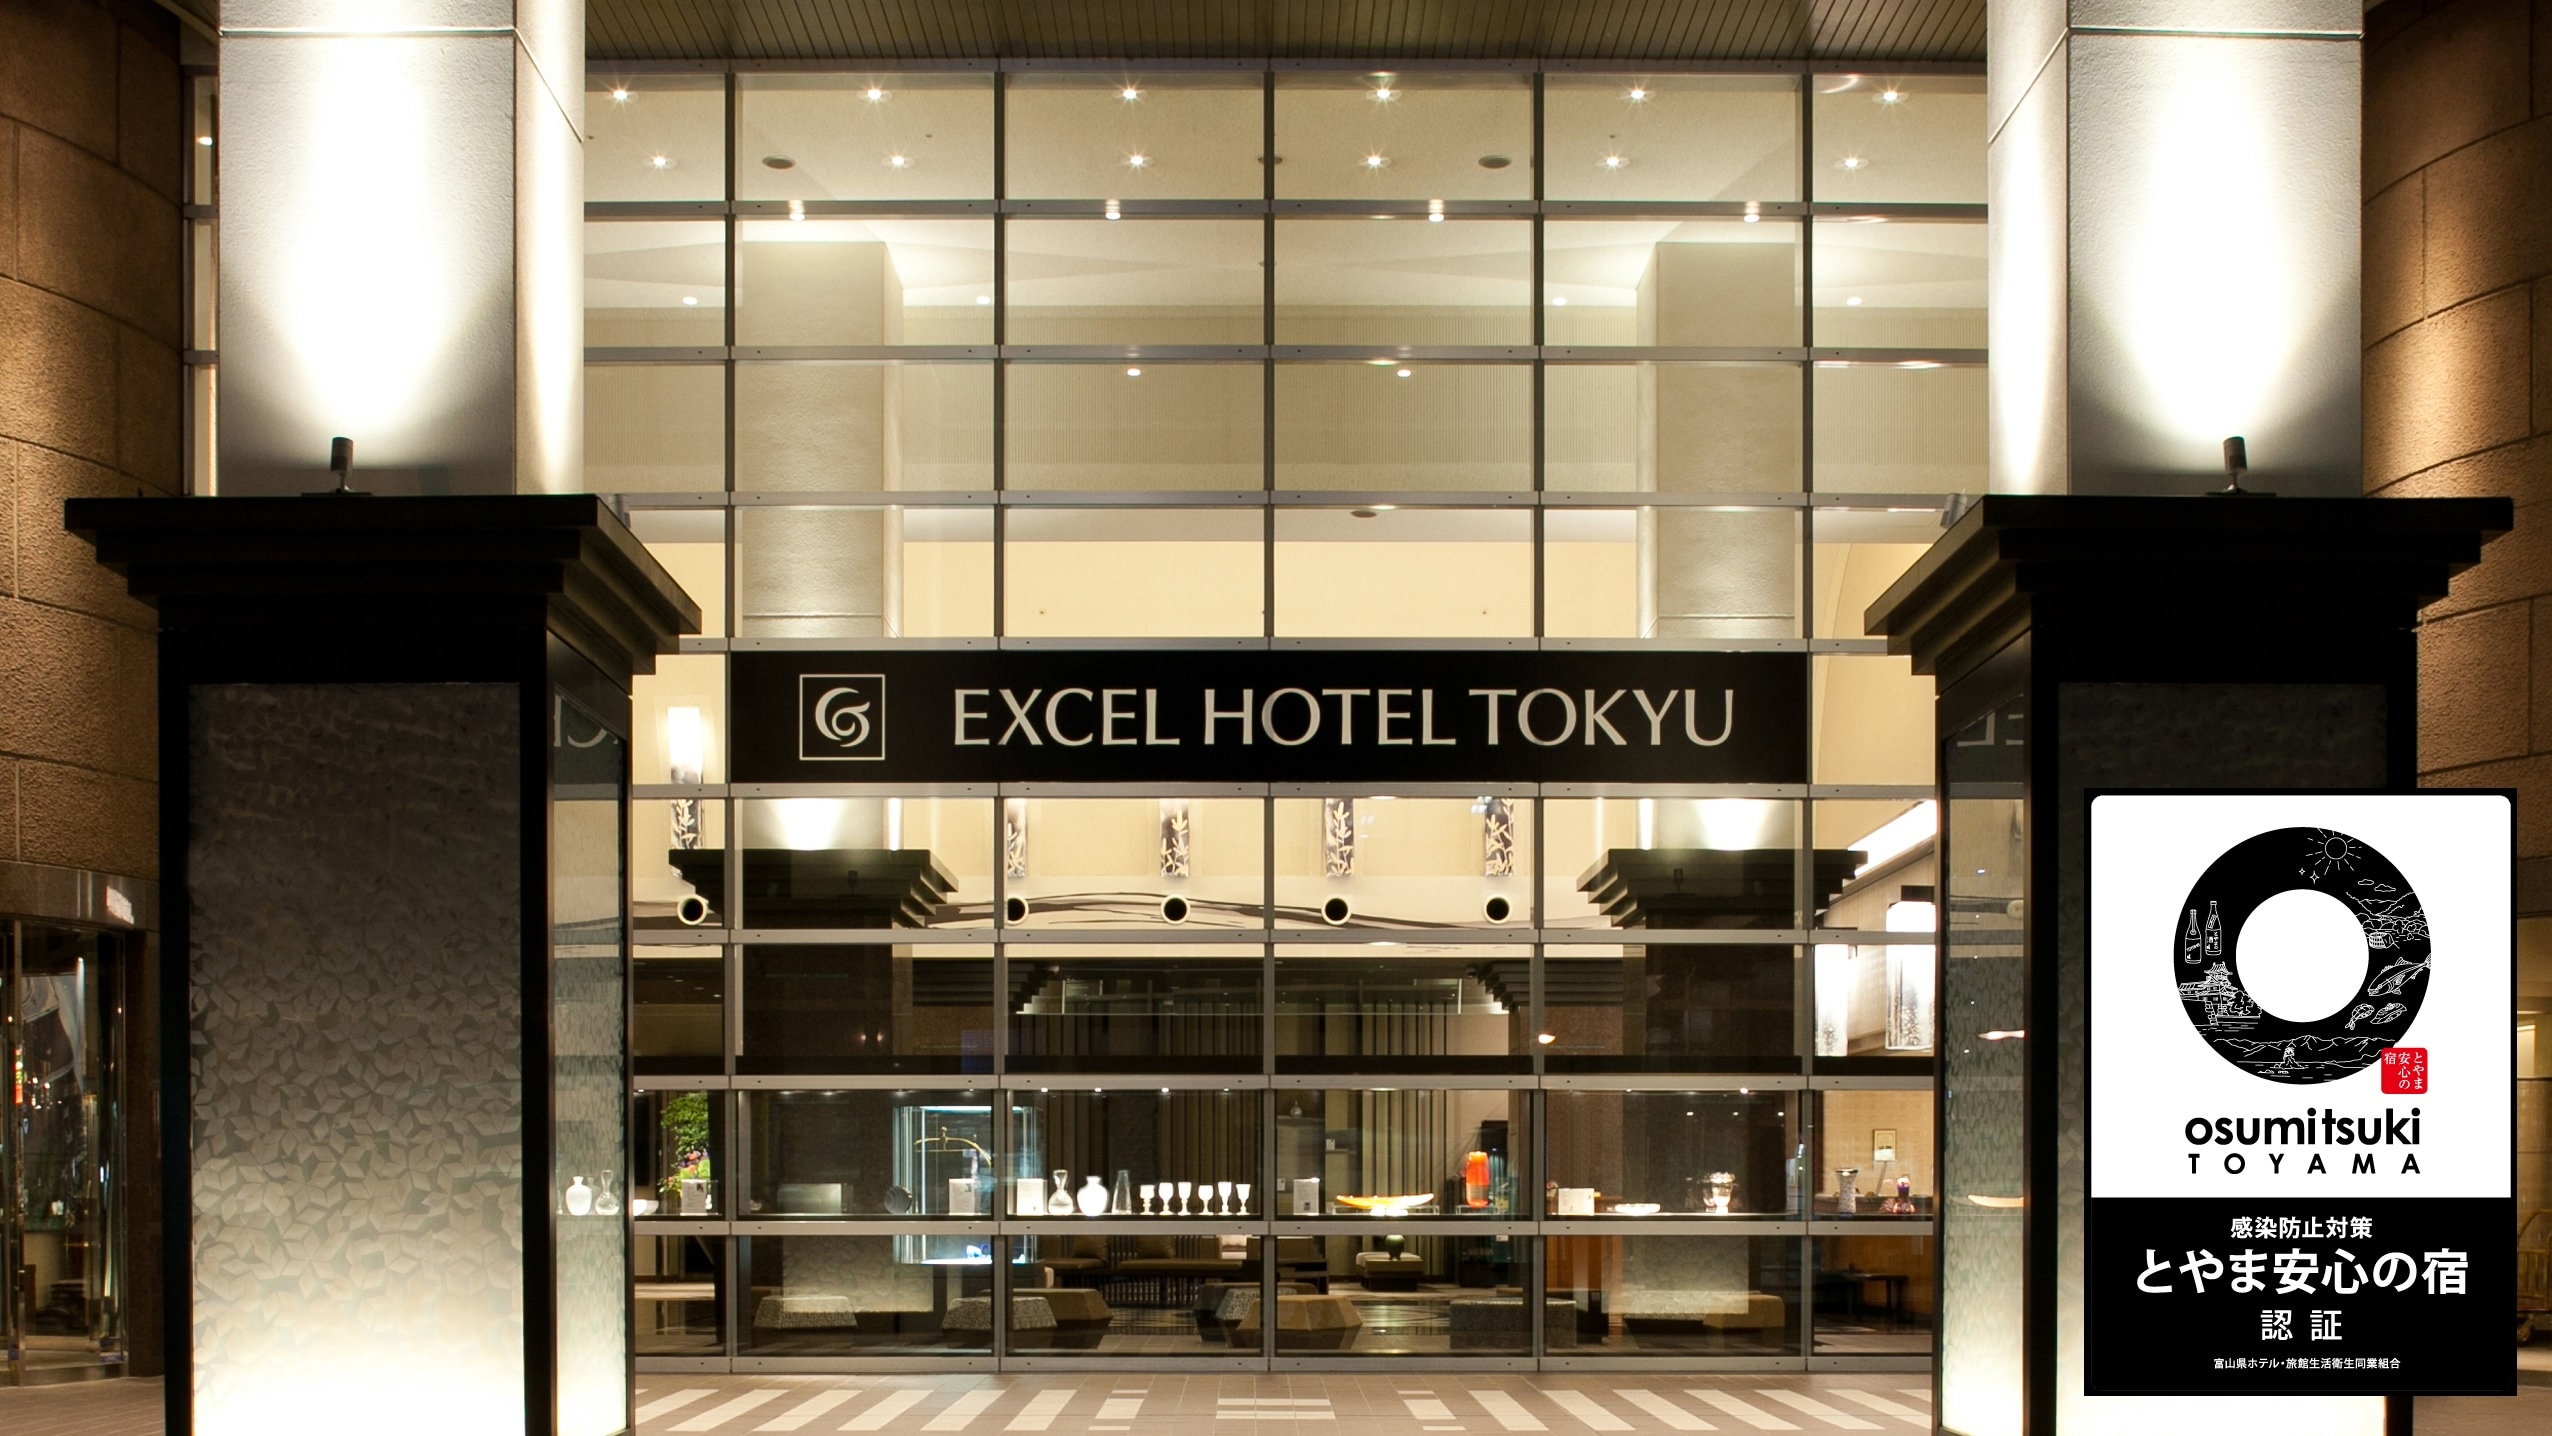 Hotel appearance Toyama safe inn certification